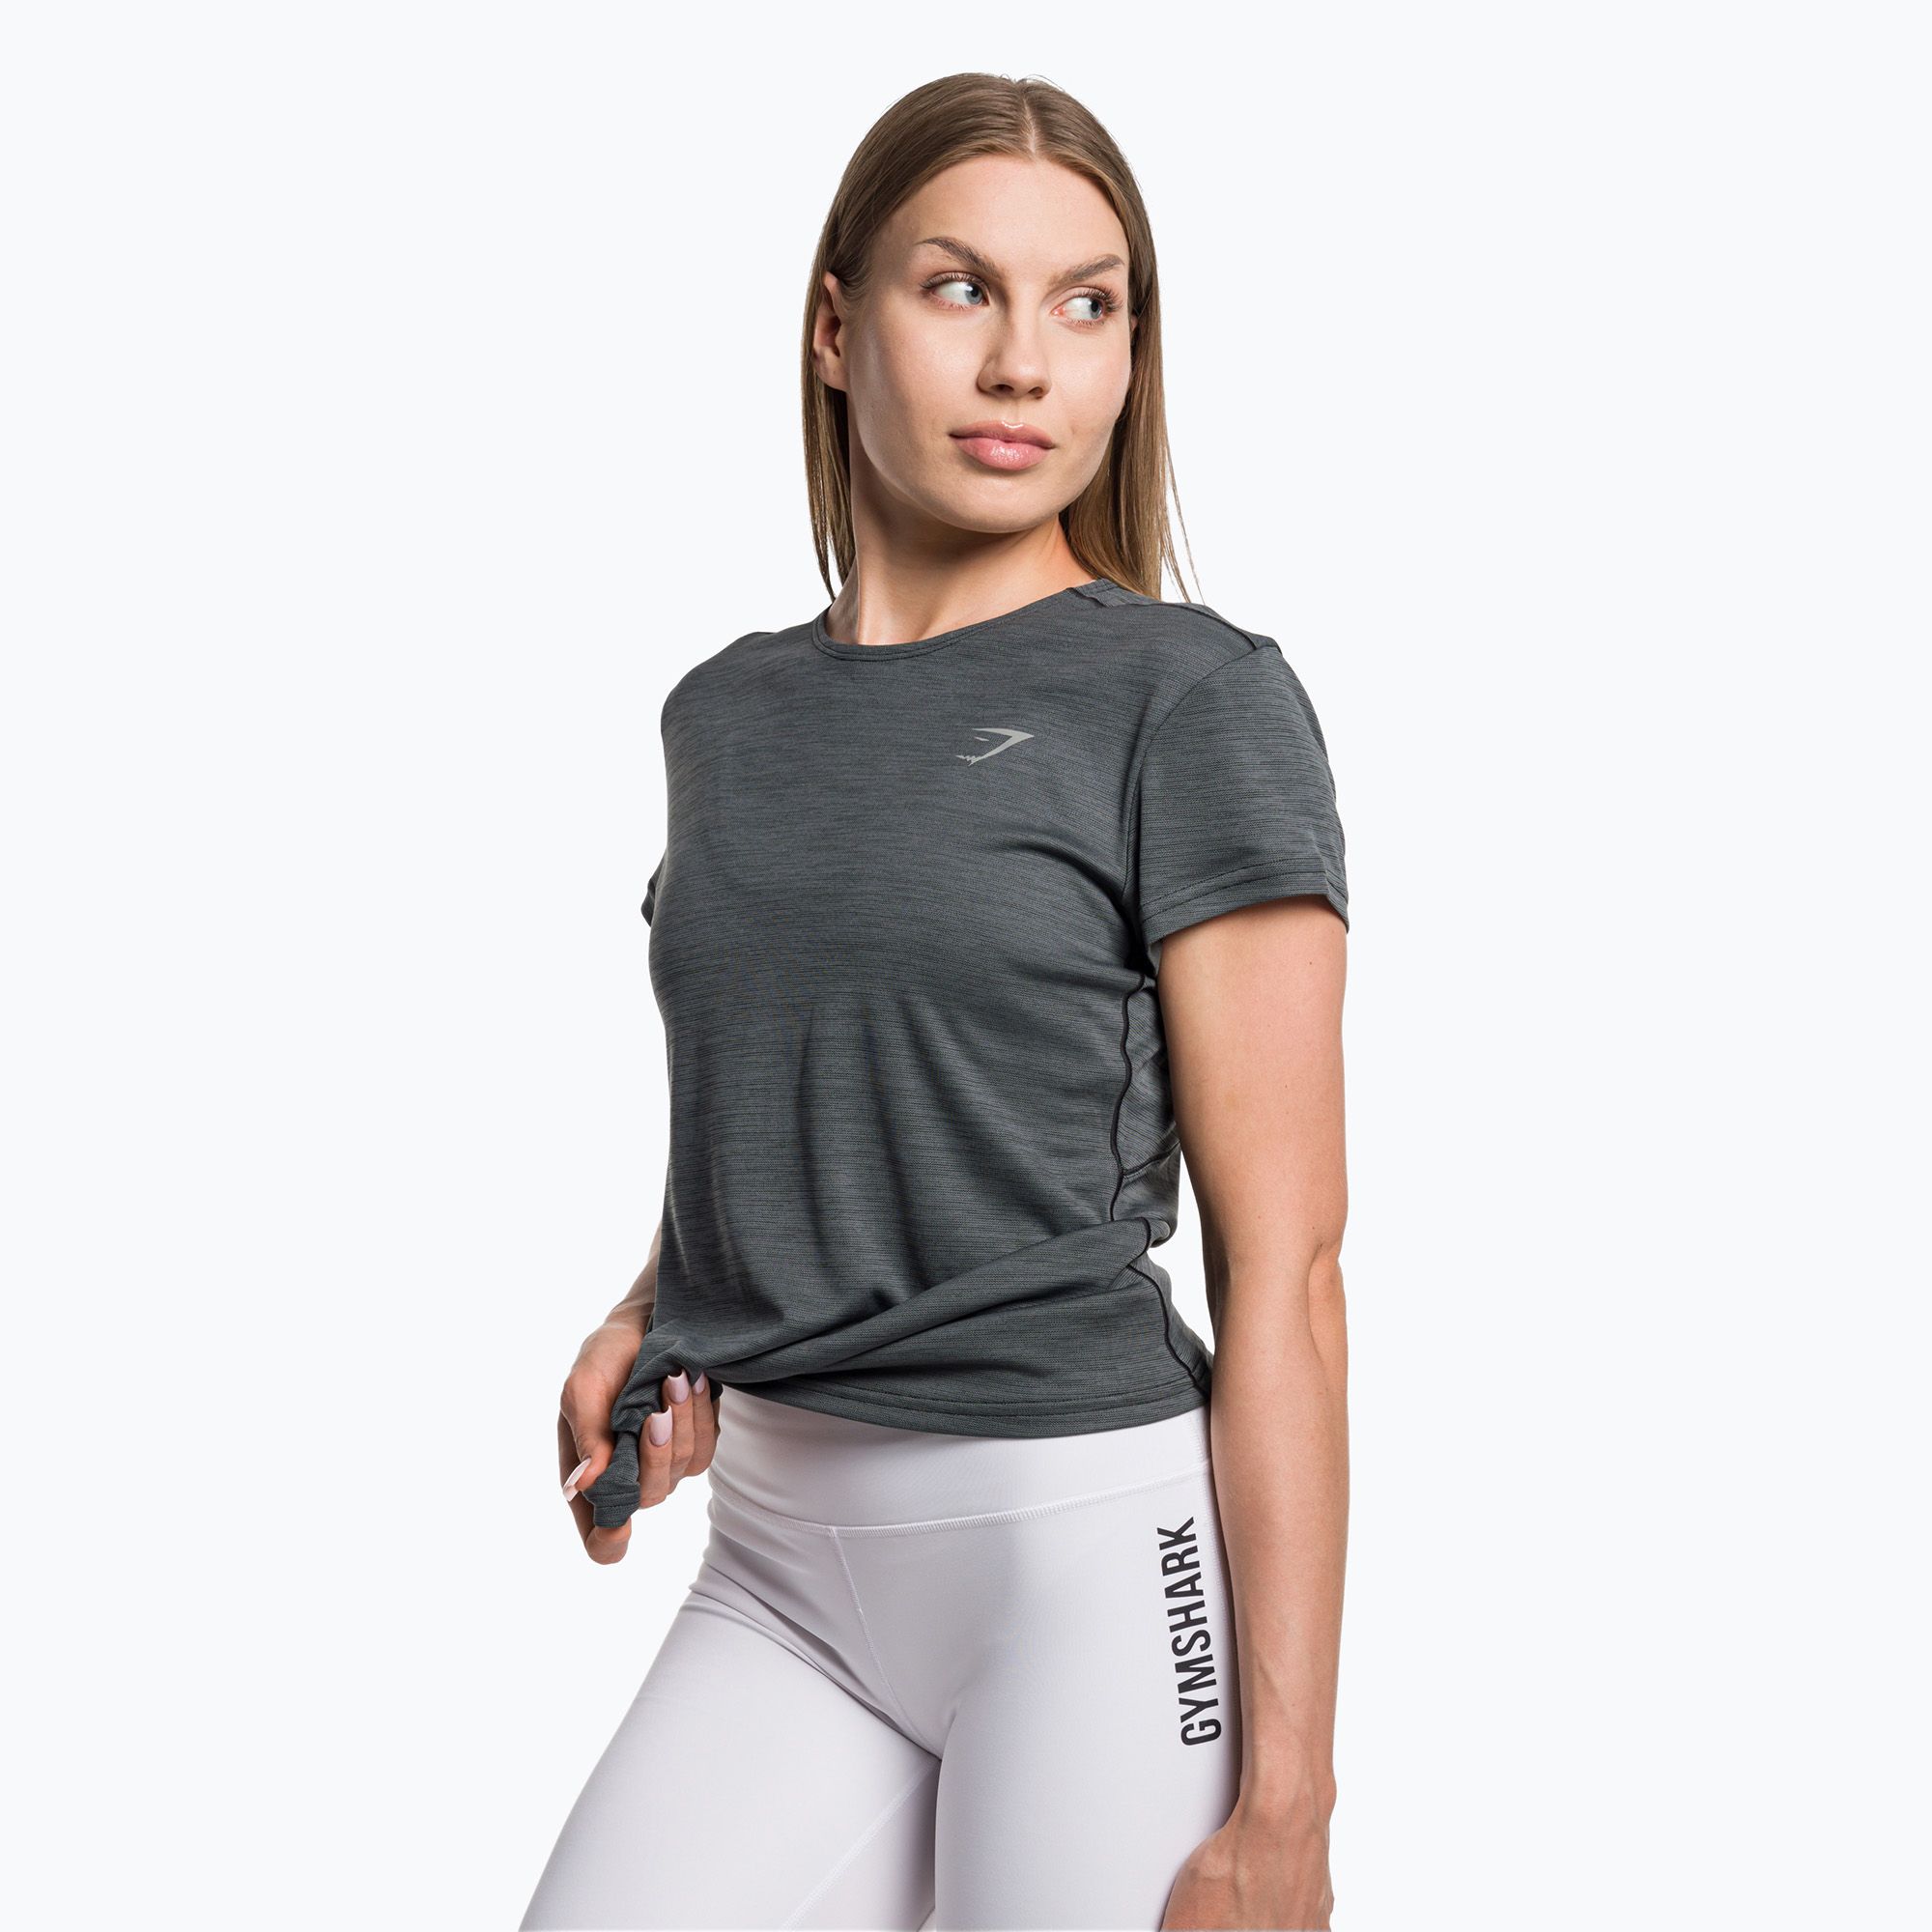 https://sportano.com/img/986c30c27a3d26a3ee16c136f92f4ff5/5/0/5057913562786_1-jpg/women-s-gymshark-running-top-ss-dark-grey-training-t-shirt-0.jpg